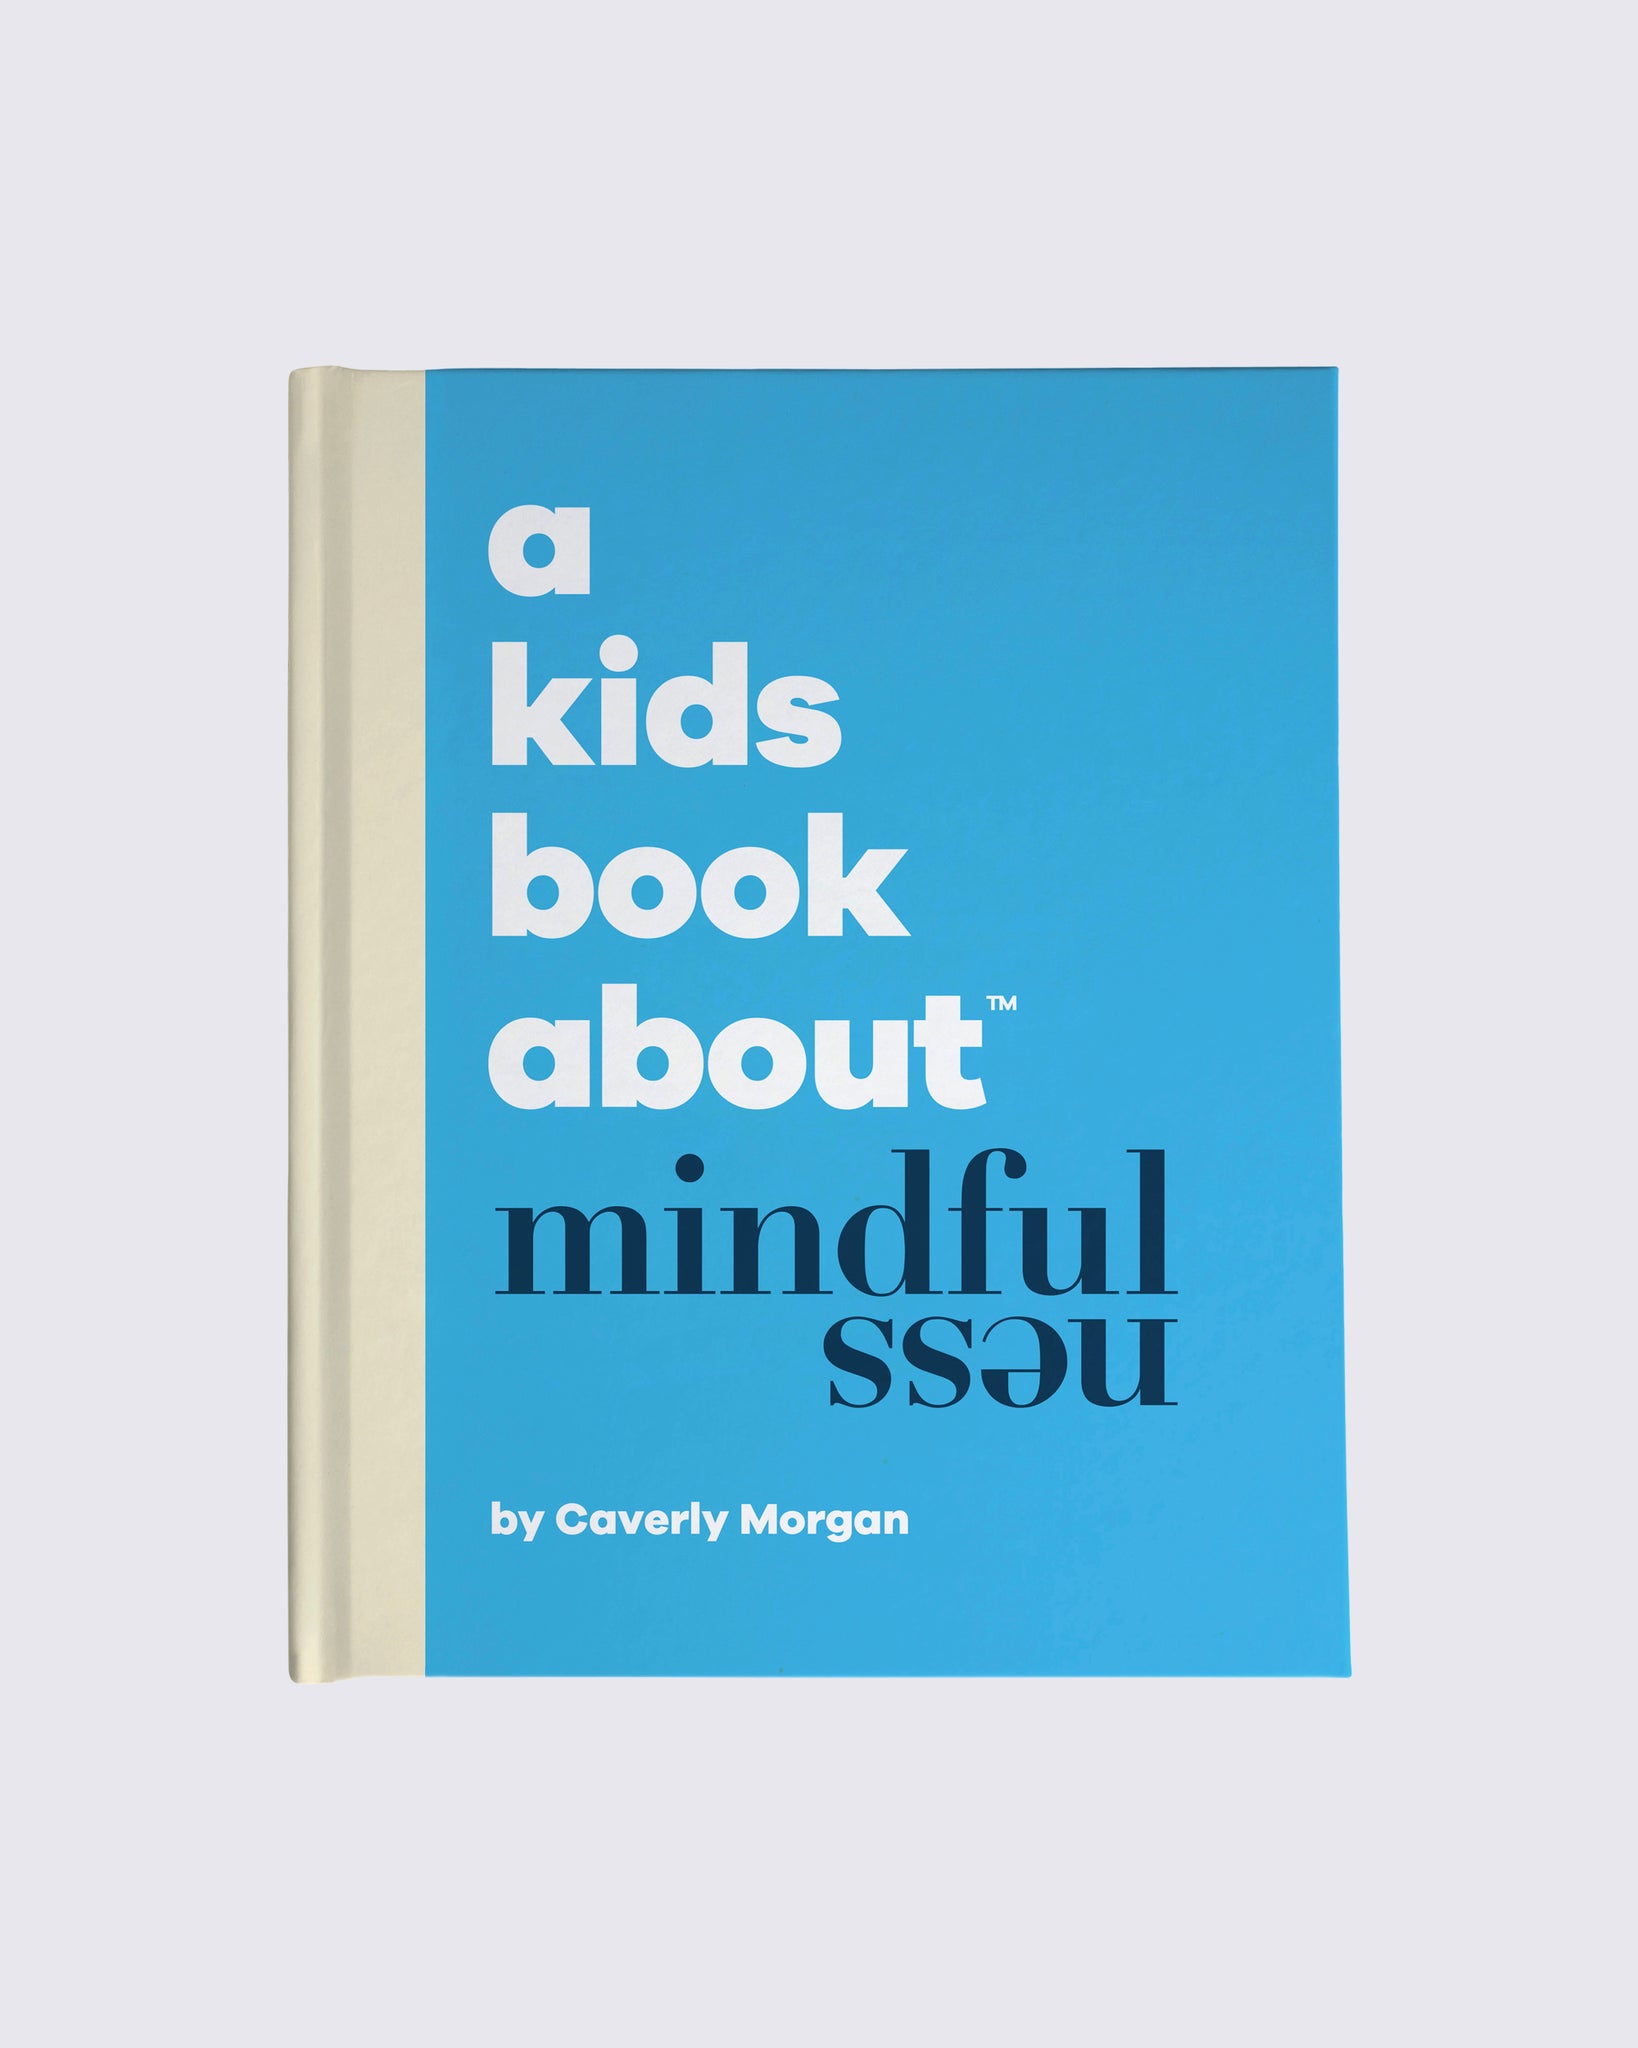 A Kids Book About Mindfulness